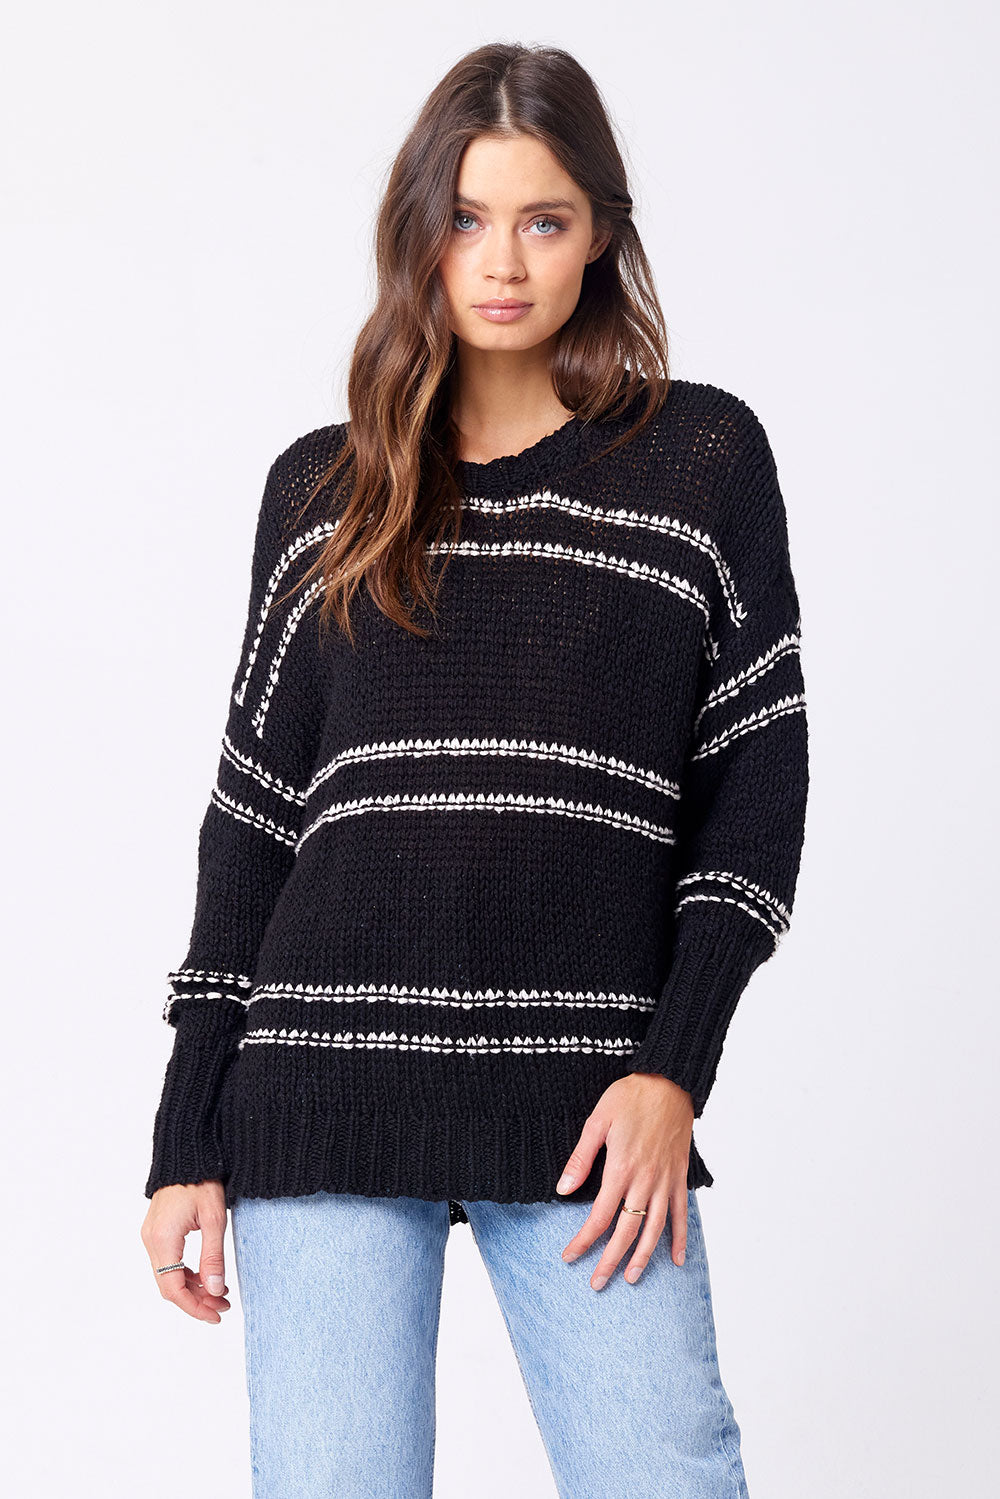 Autumn Sweater - Saltwater Luxe